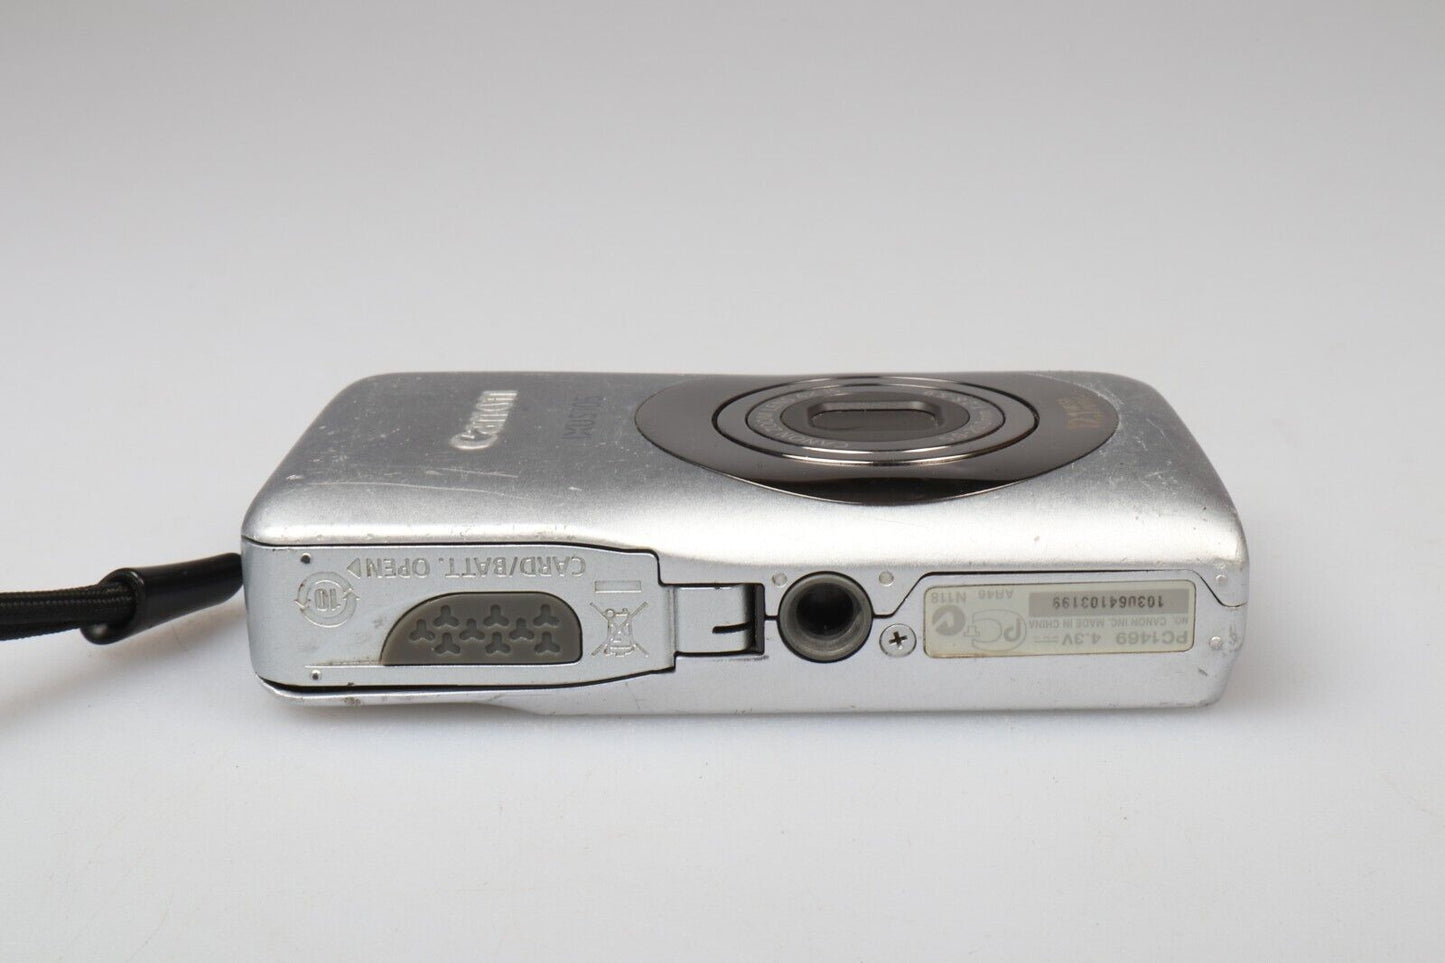 Canon PowerShot IXUS 105 | Digital Compact Camera | 12.1 MP | Silver